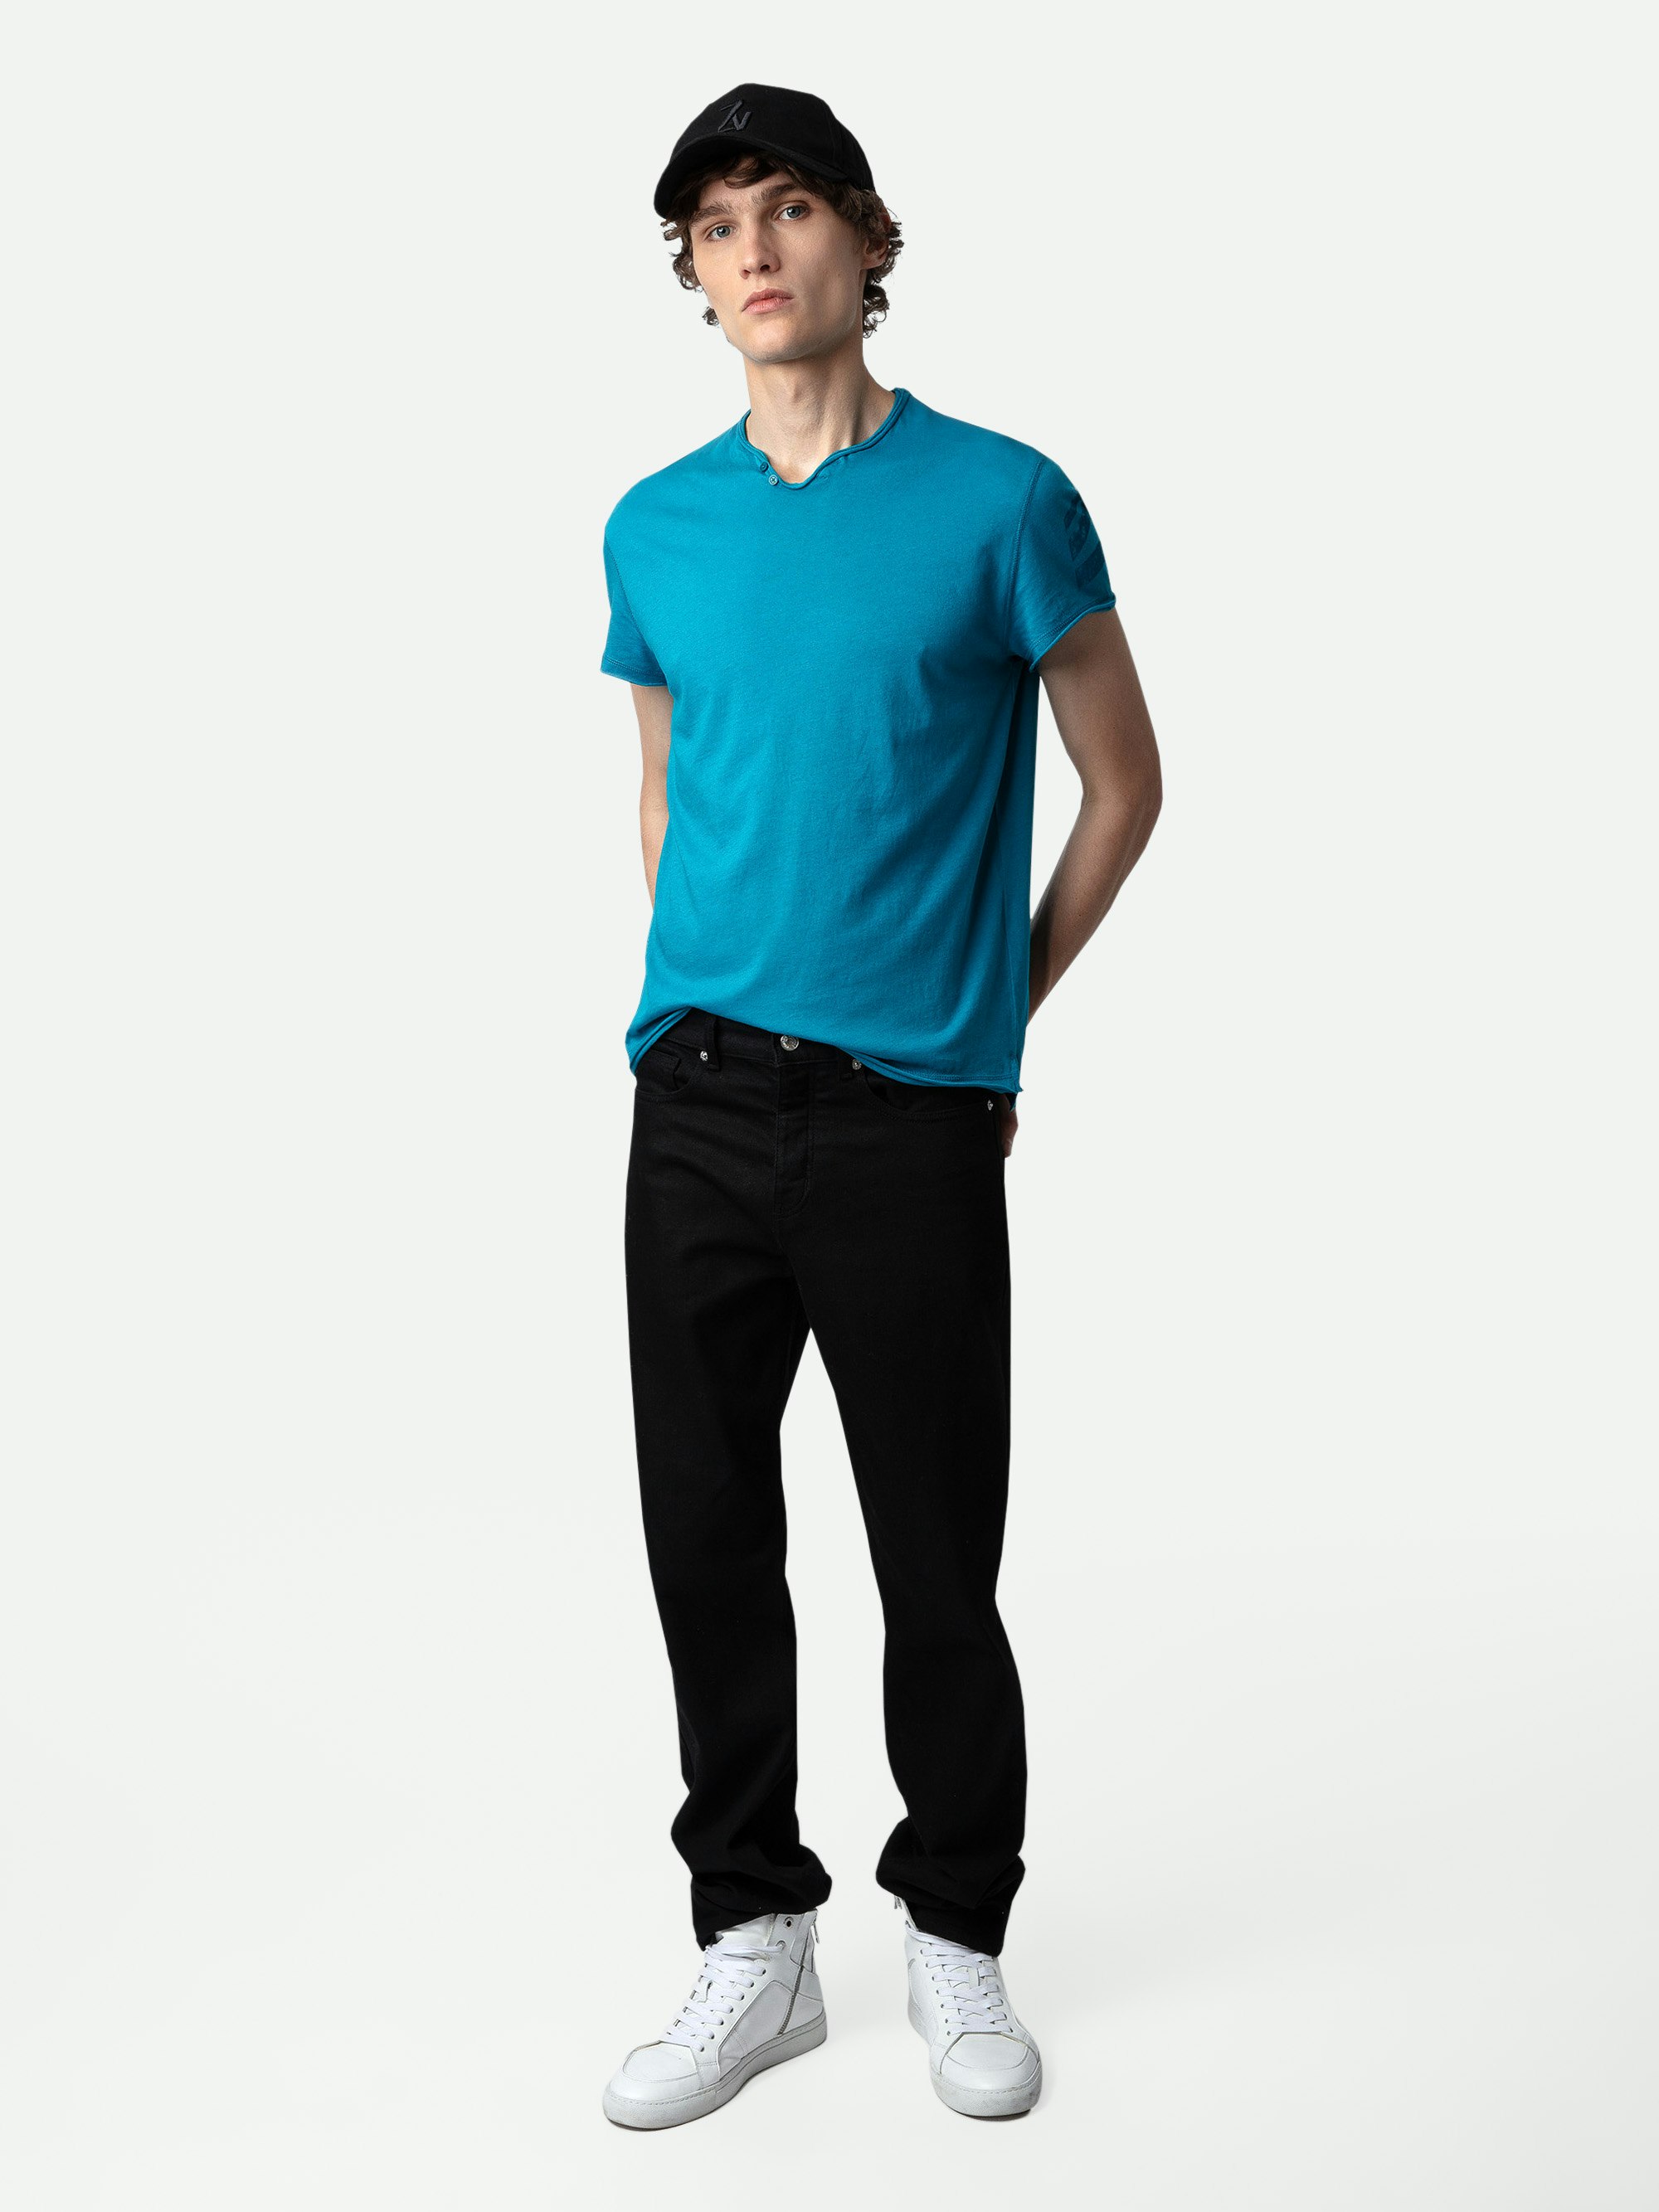 Monasti Arrow Henley T-shirt - Teal blue cotton short-sleeved Henley T-shirt with arrows on the left sleeve.